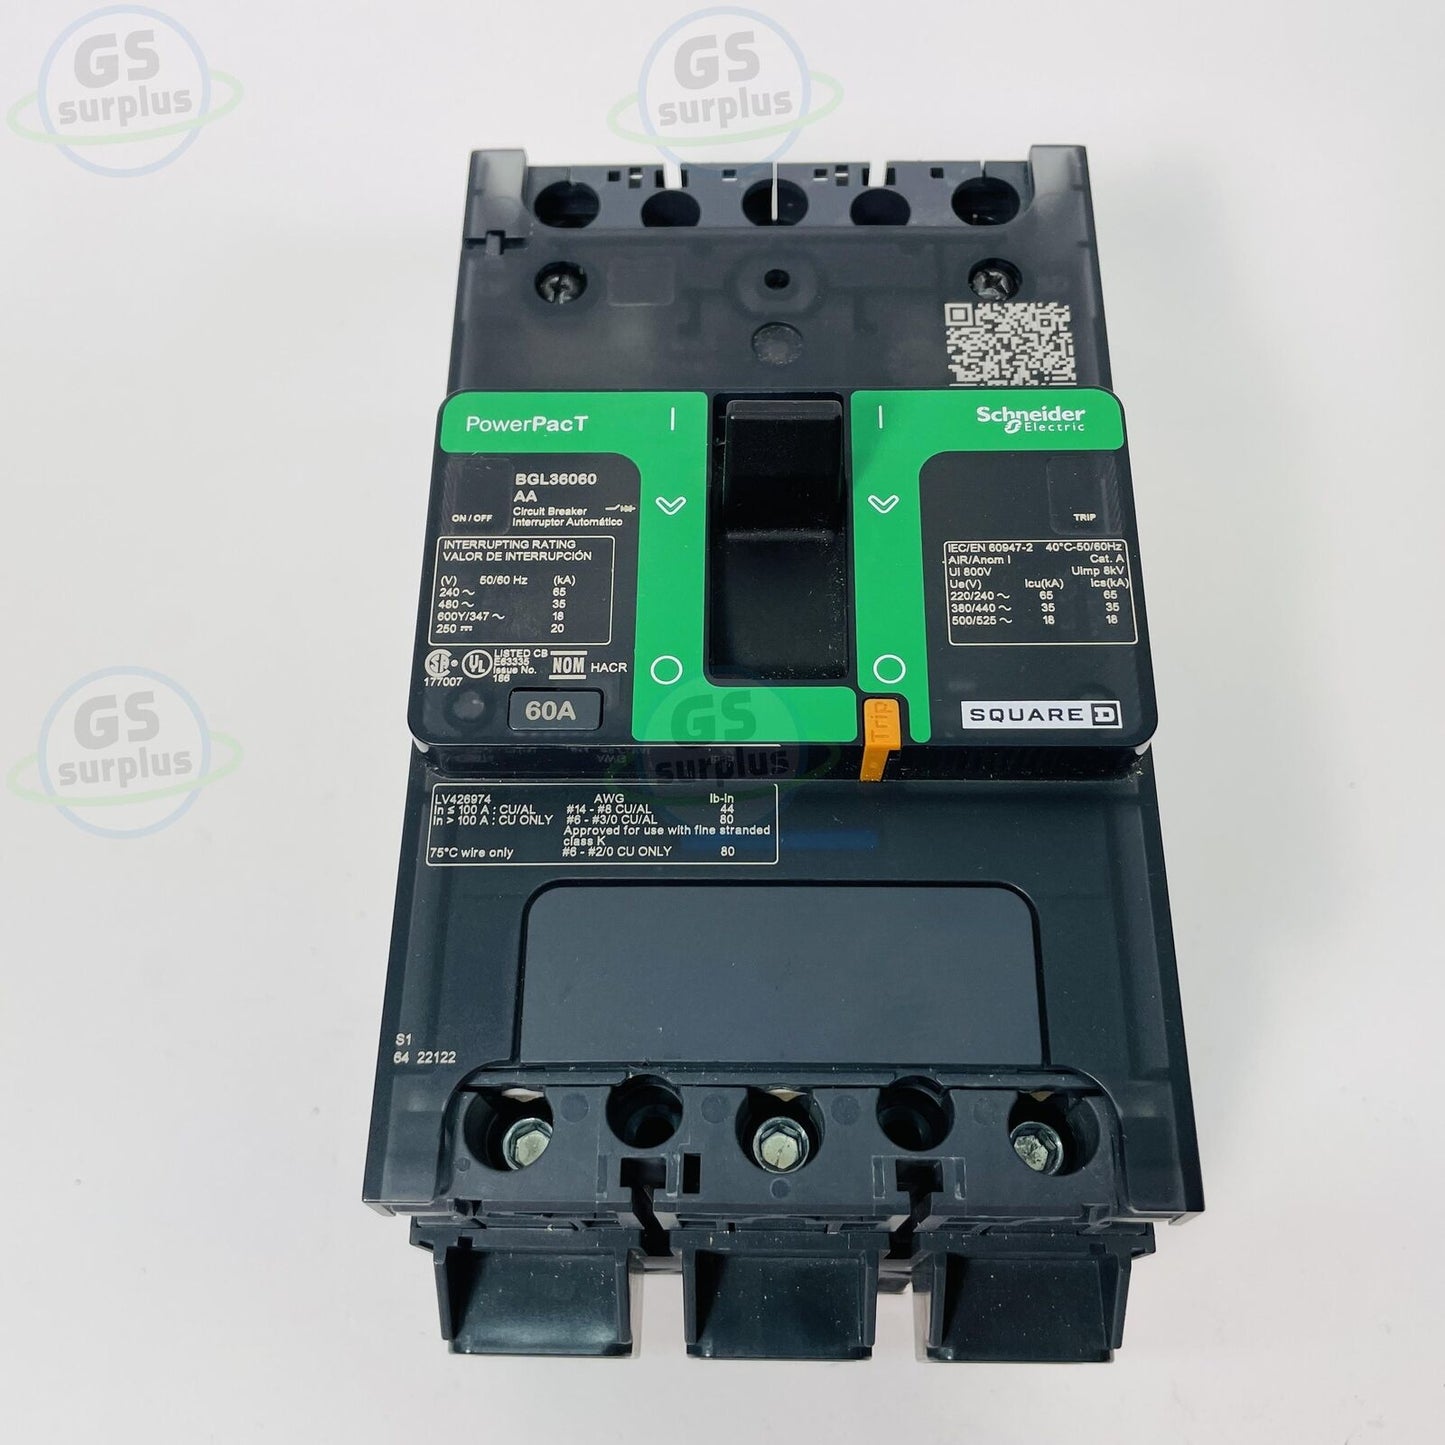 New SCHNEIDER BGL36060AA PowerPact BG60 Circuit Breaker BGL36060